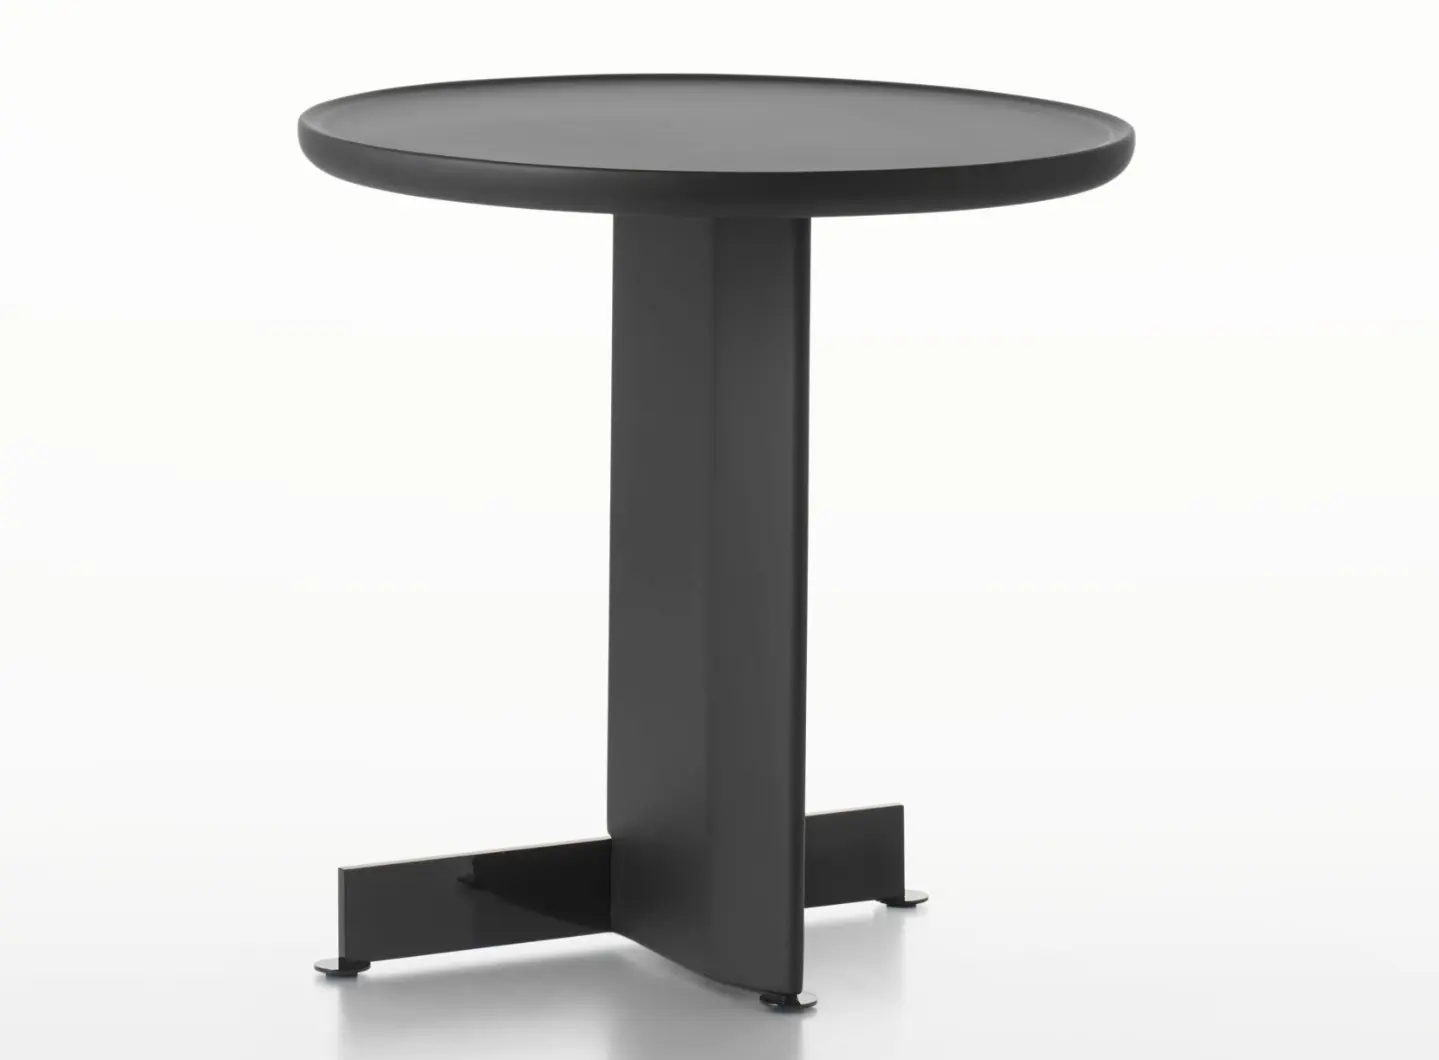 Savoy low table ø44, designed by Patrick Norguet